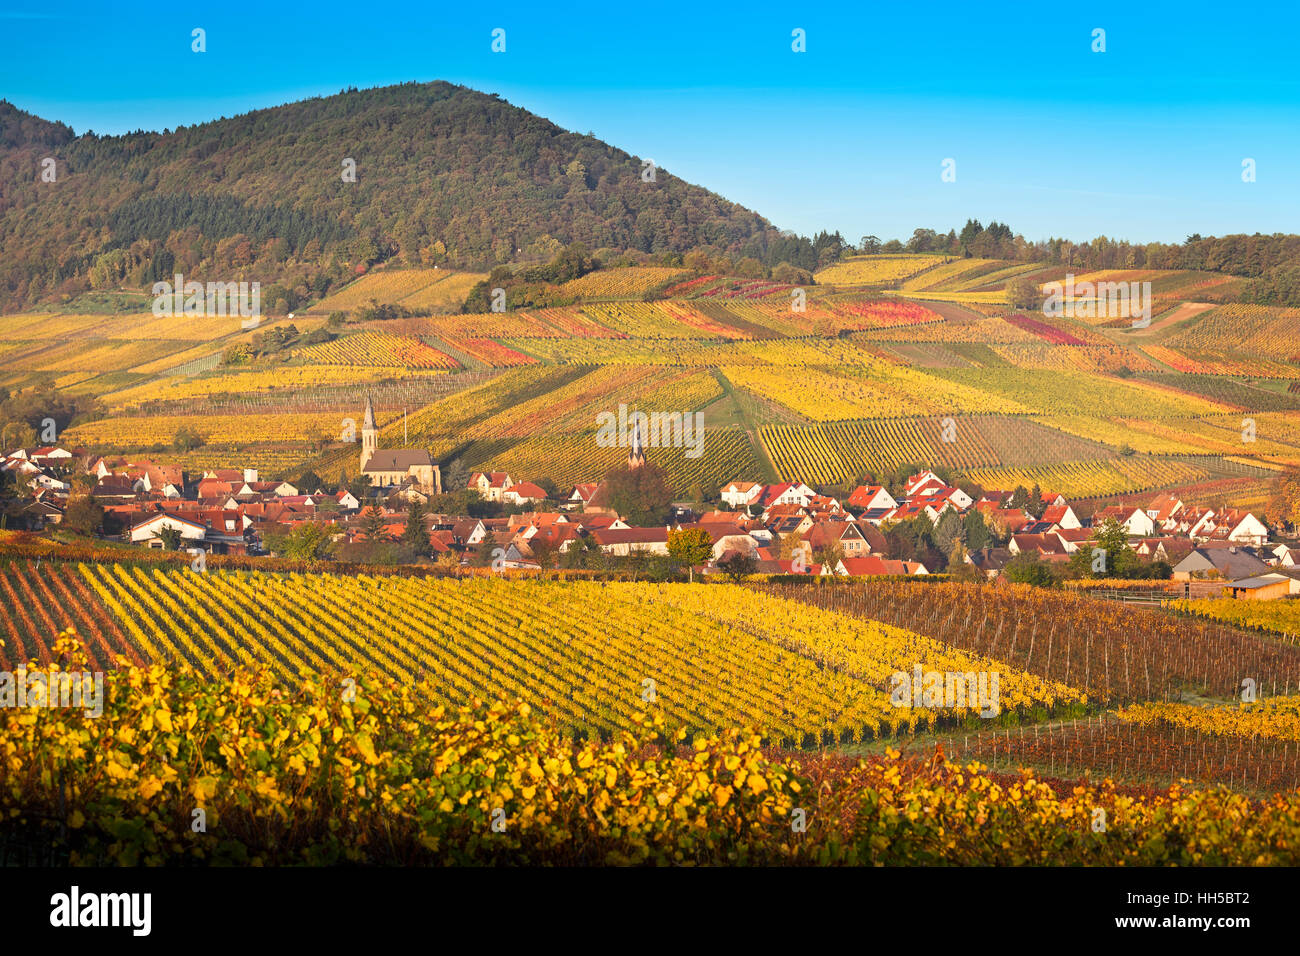 Village with vineyards at autumn, Pfalz, Germany Stock Photo